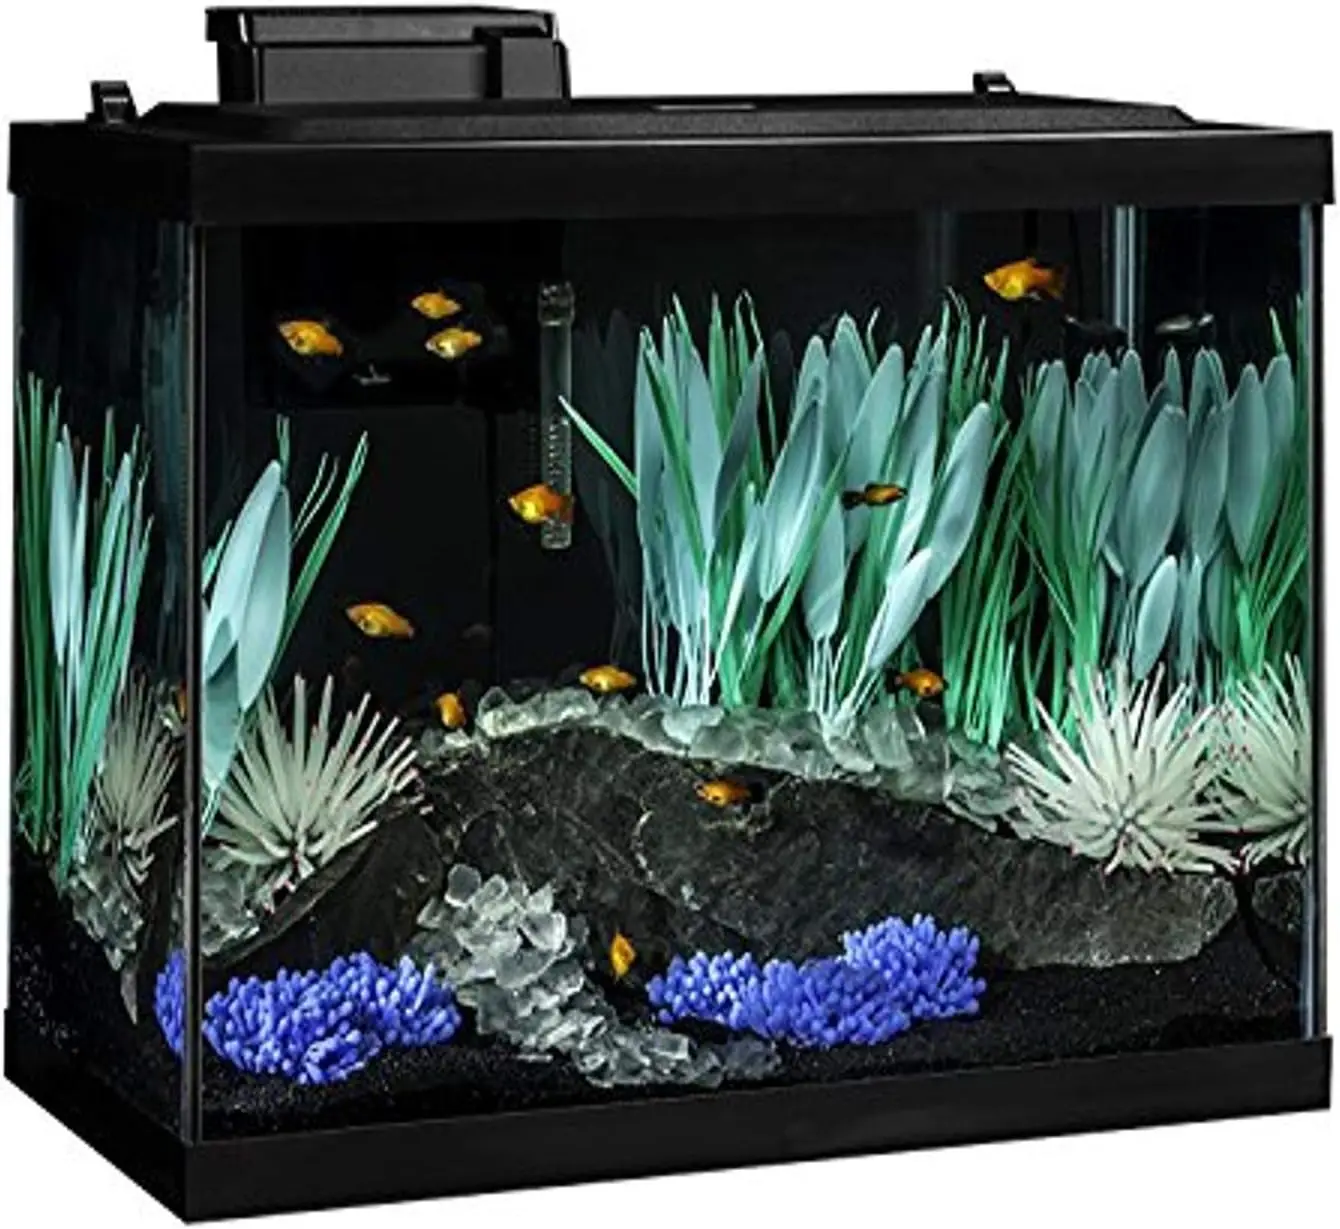 

2024 USA ColorFusion Aquarium 20 Gallon Fish Tank Kit, Includes LED Lighting and Decor